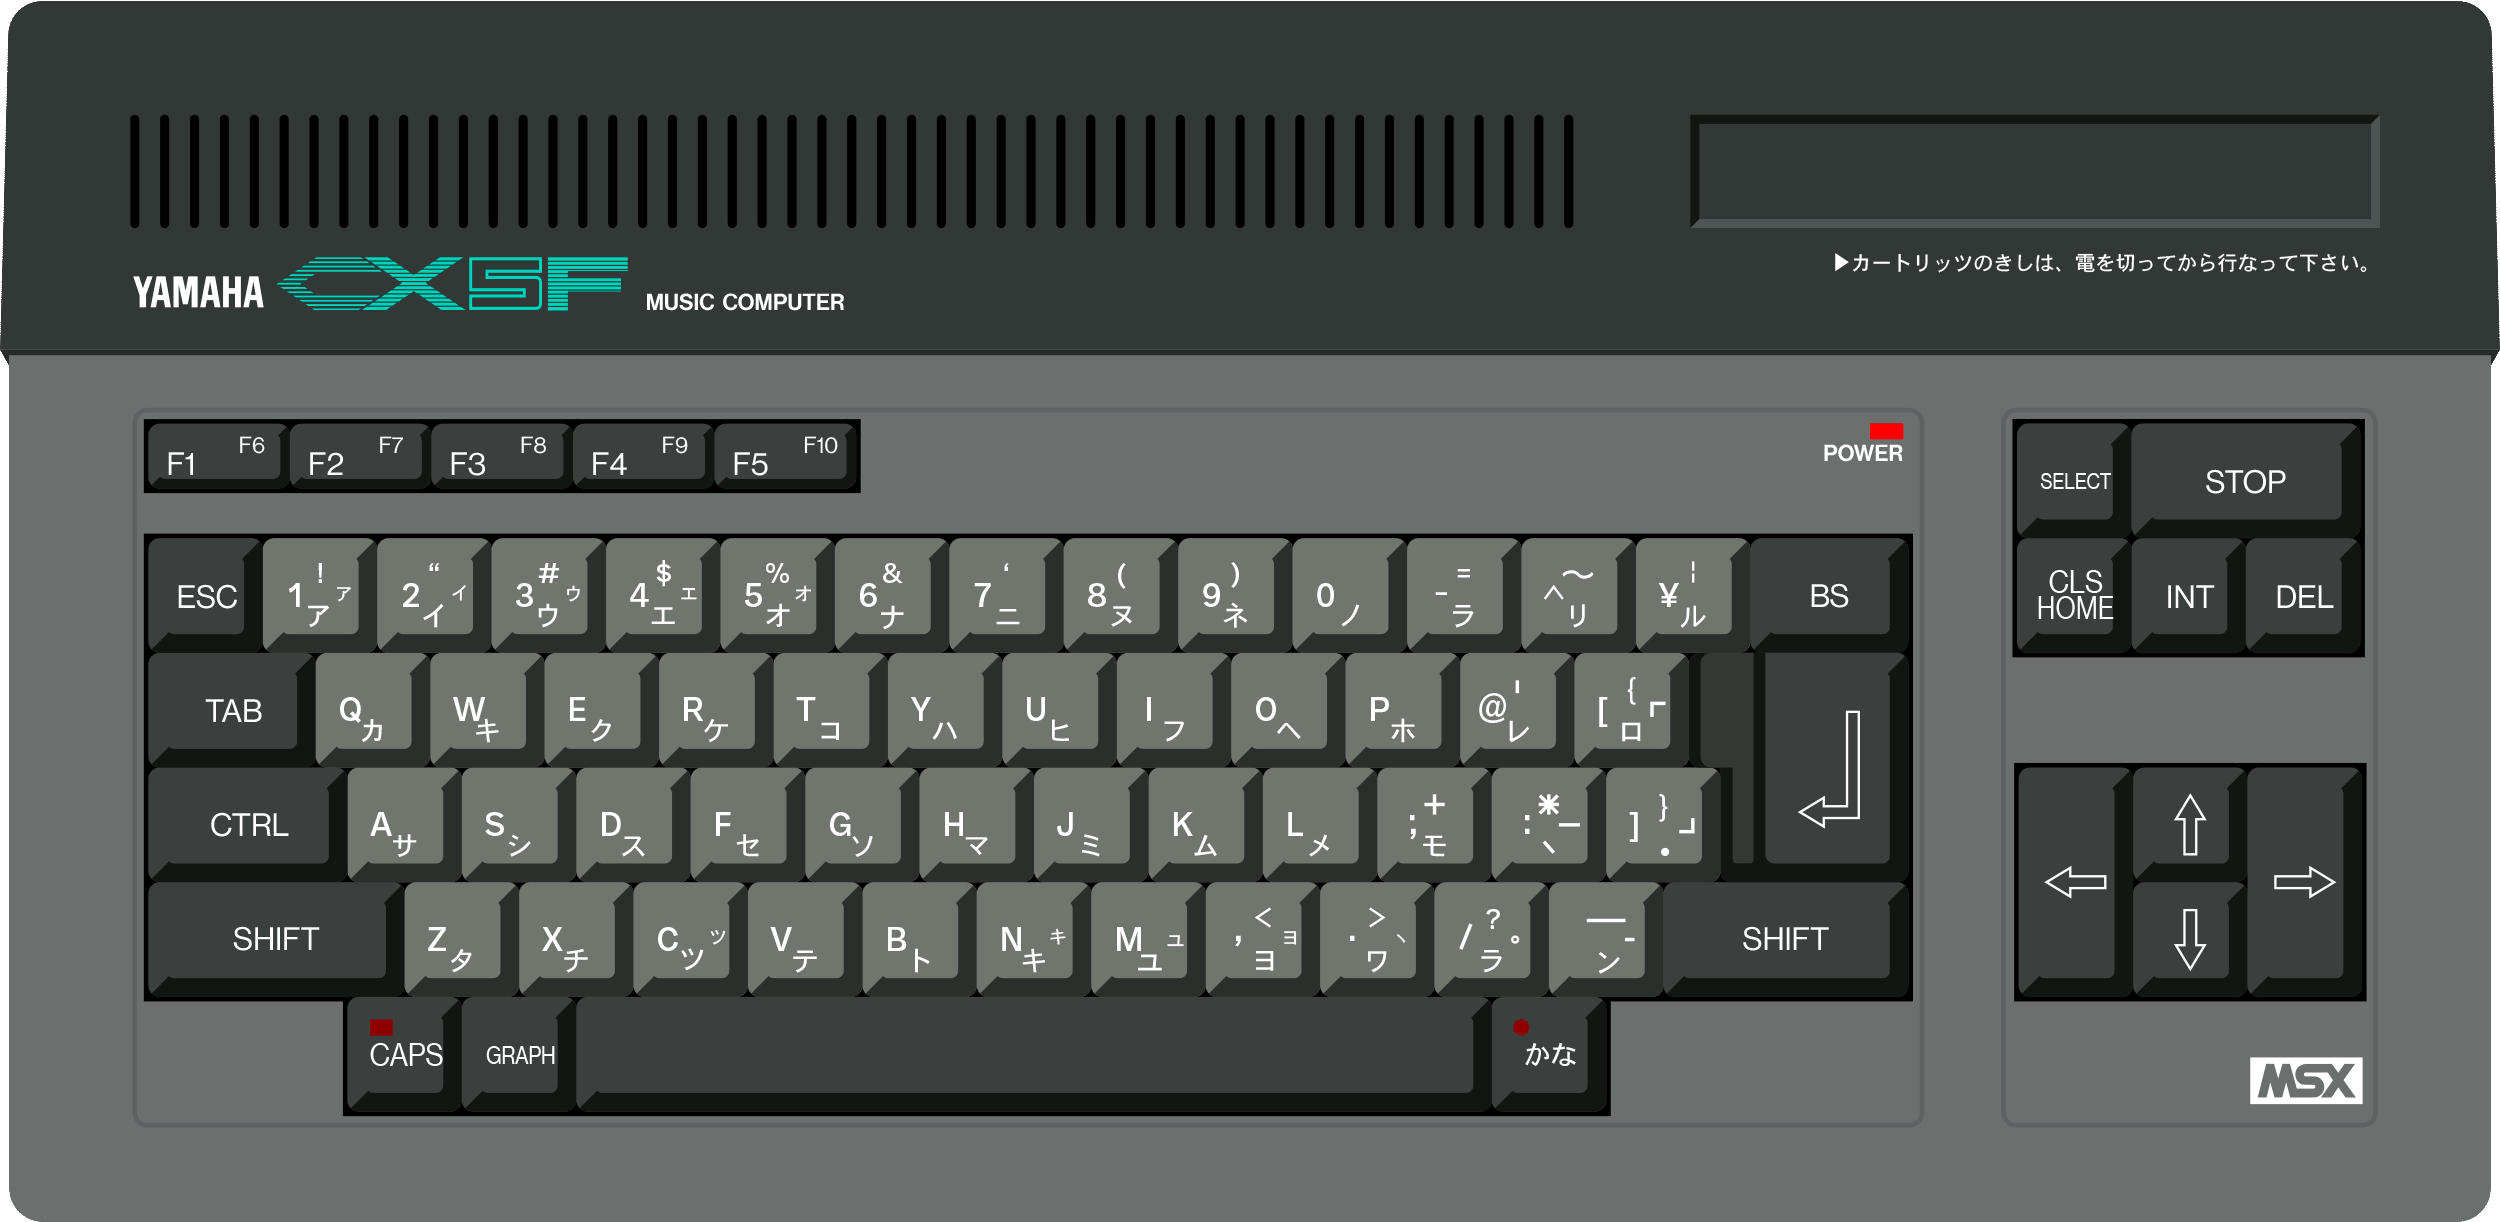 Yamaha CX5F music computer MSX